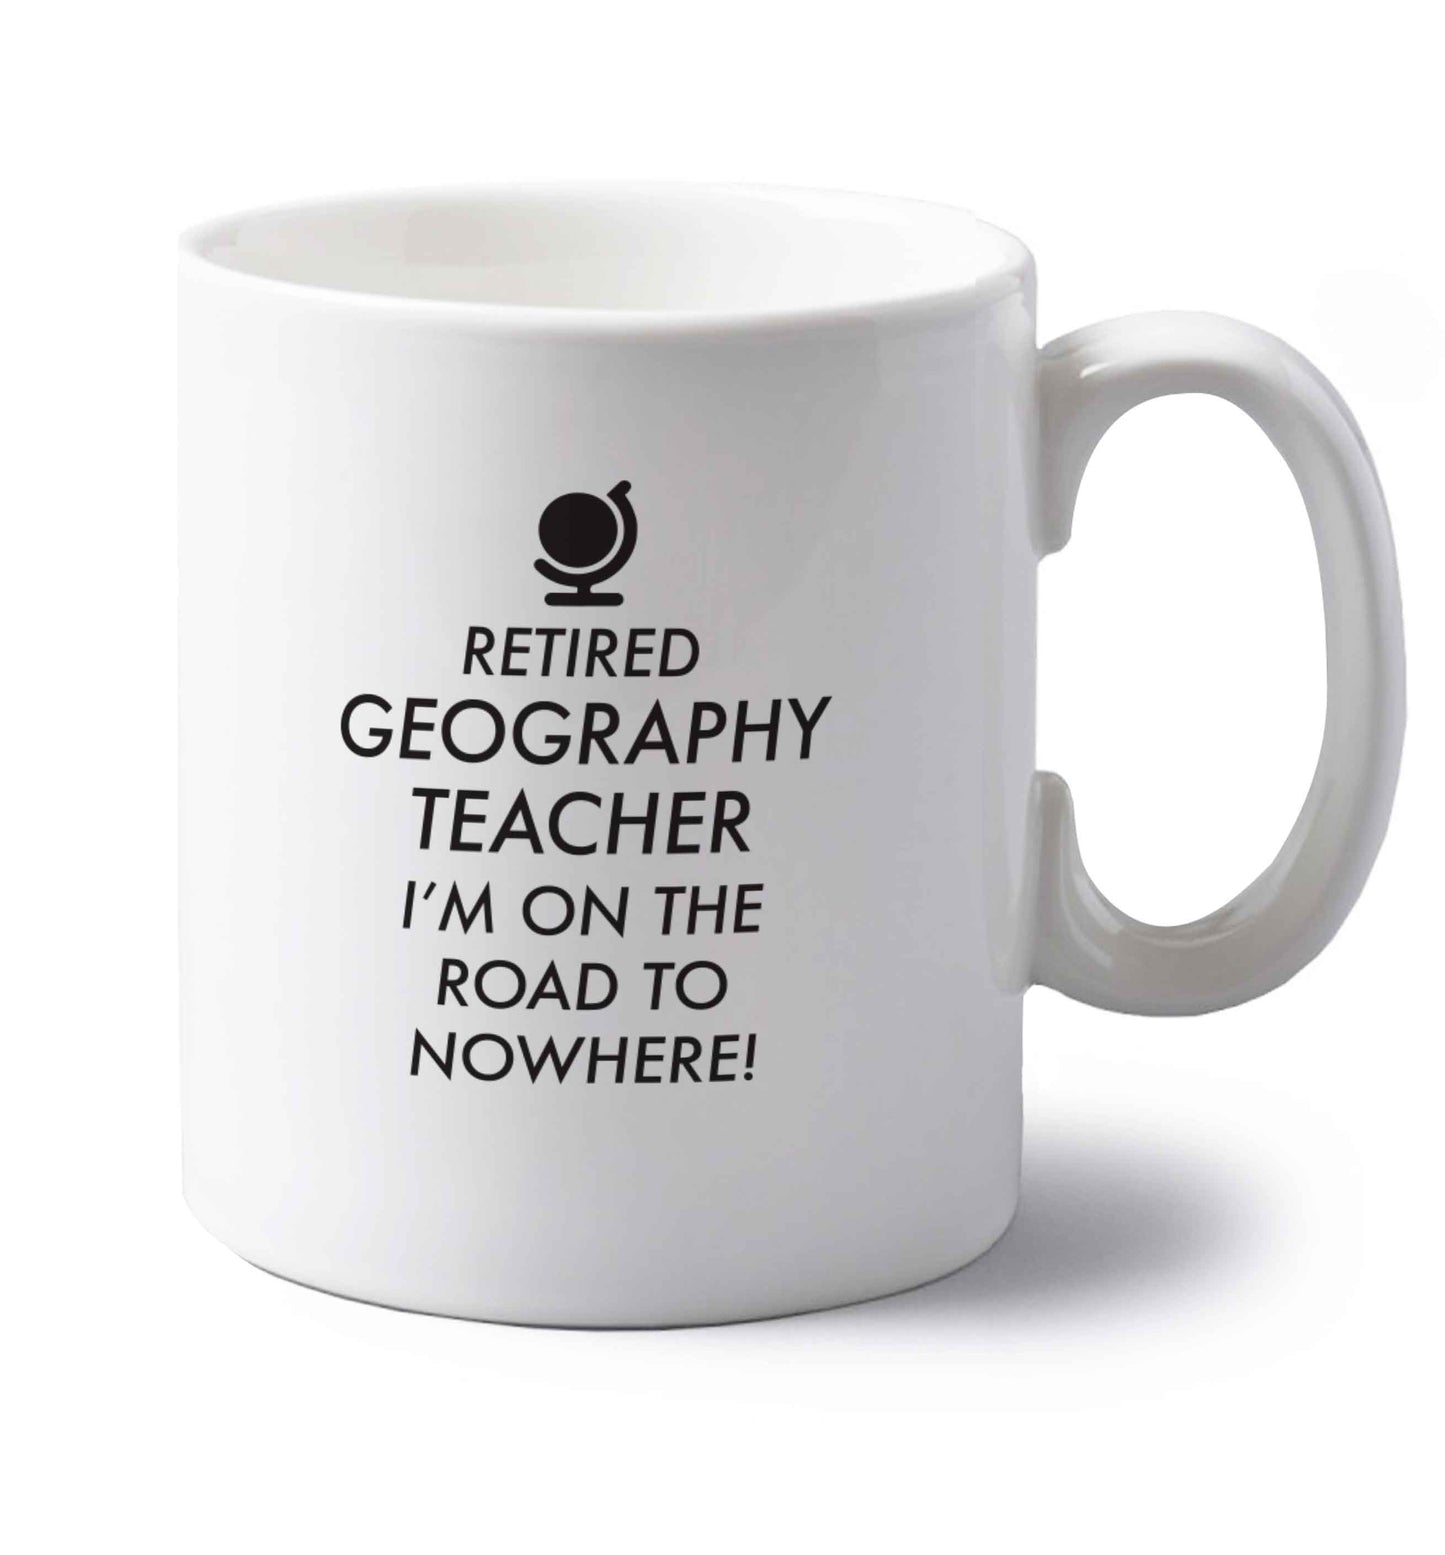 Retired geography teacher I'm on the road to nowhere left handed white ceramic mug 